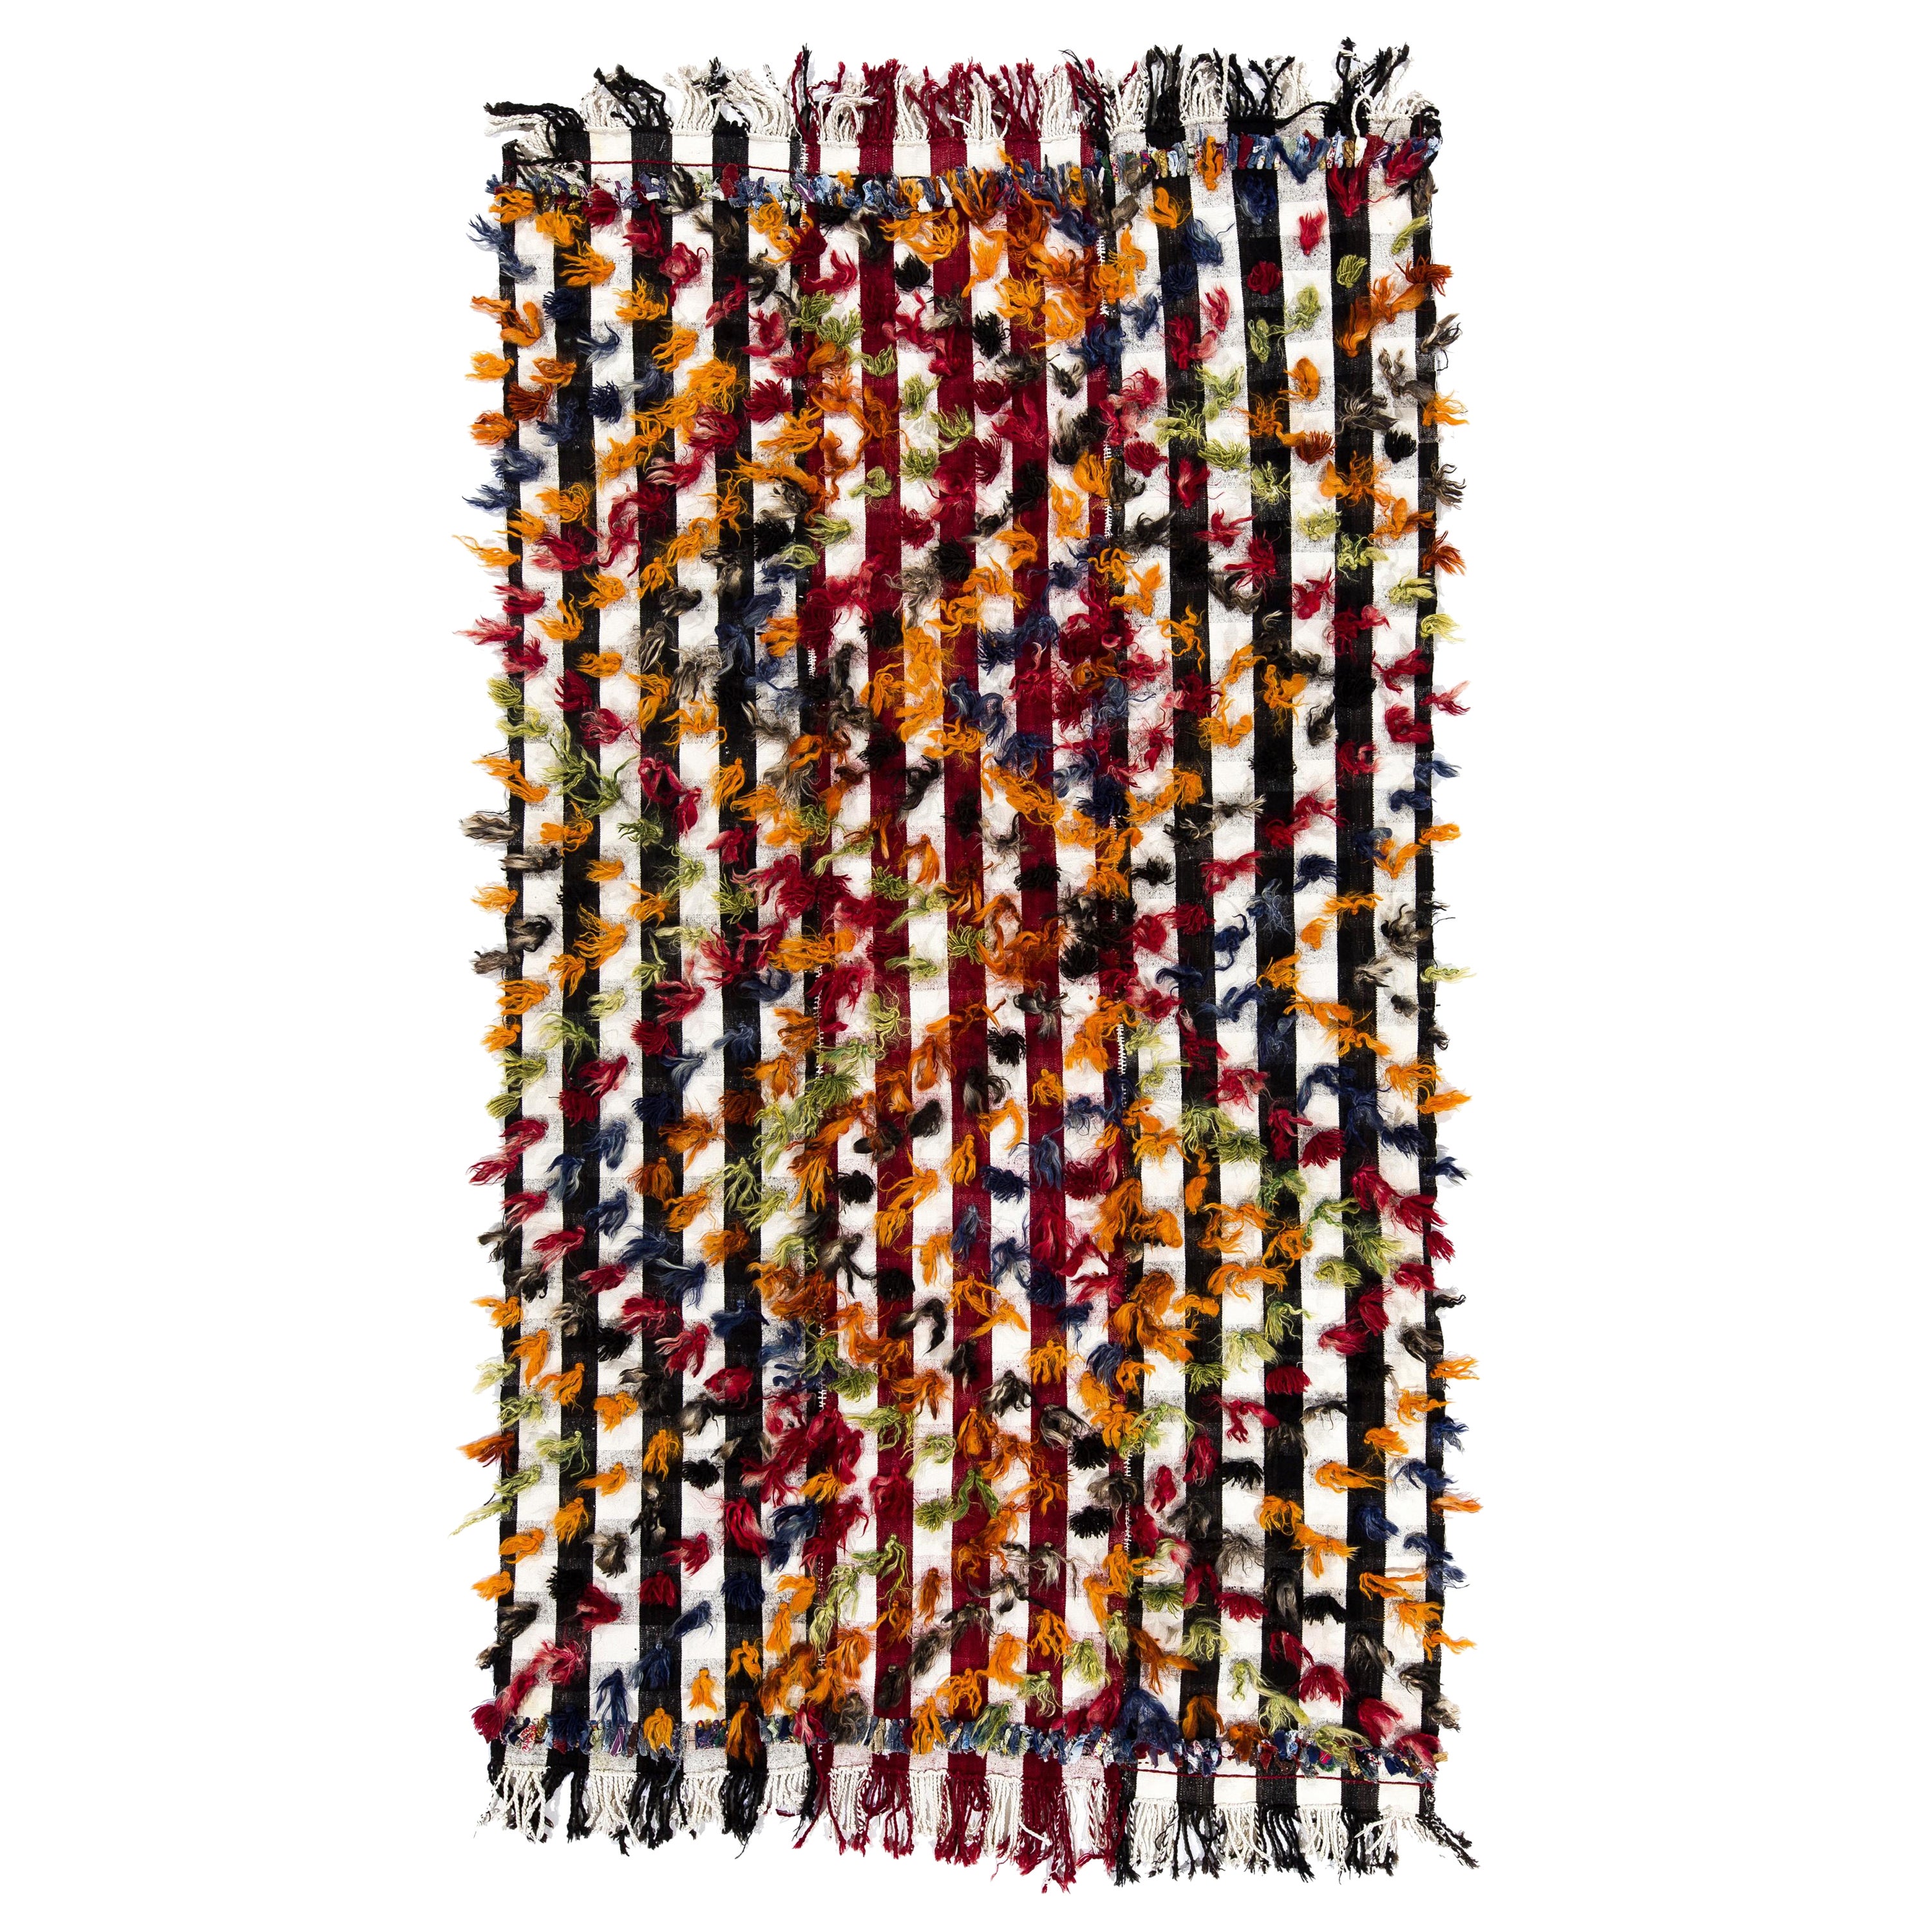 4,8x9 Fuß Banded Stammes-Kelim-Teppich mit bunten Poms. Bettdecke, Wandbehang